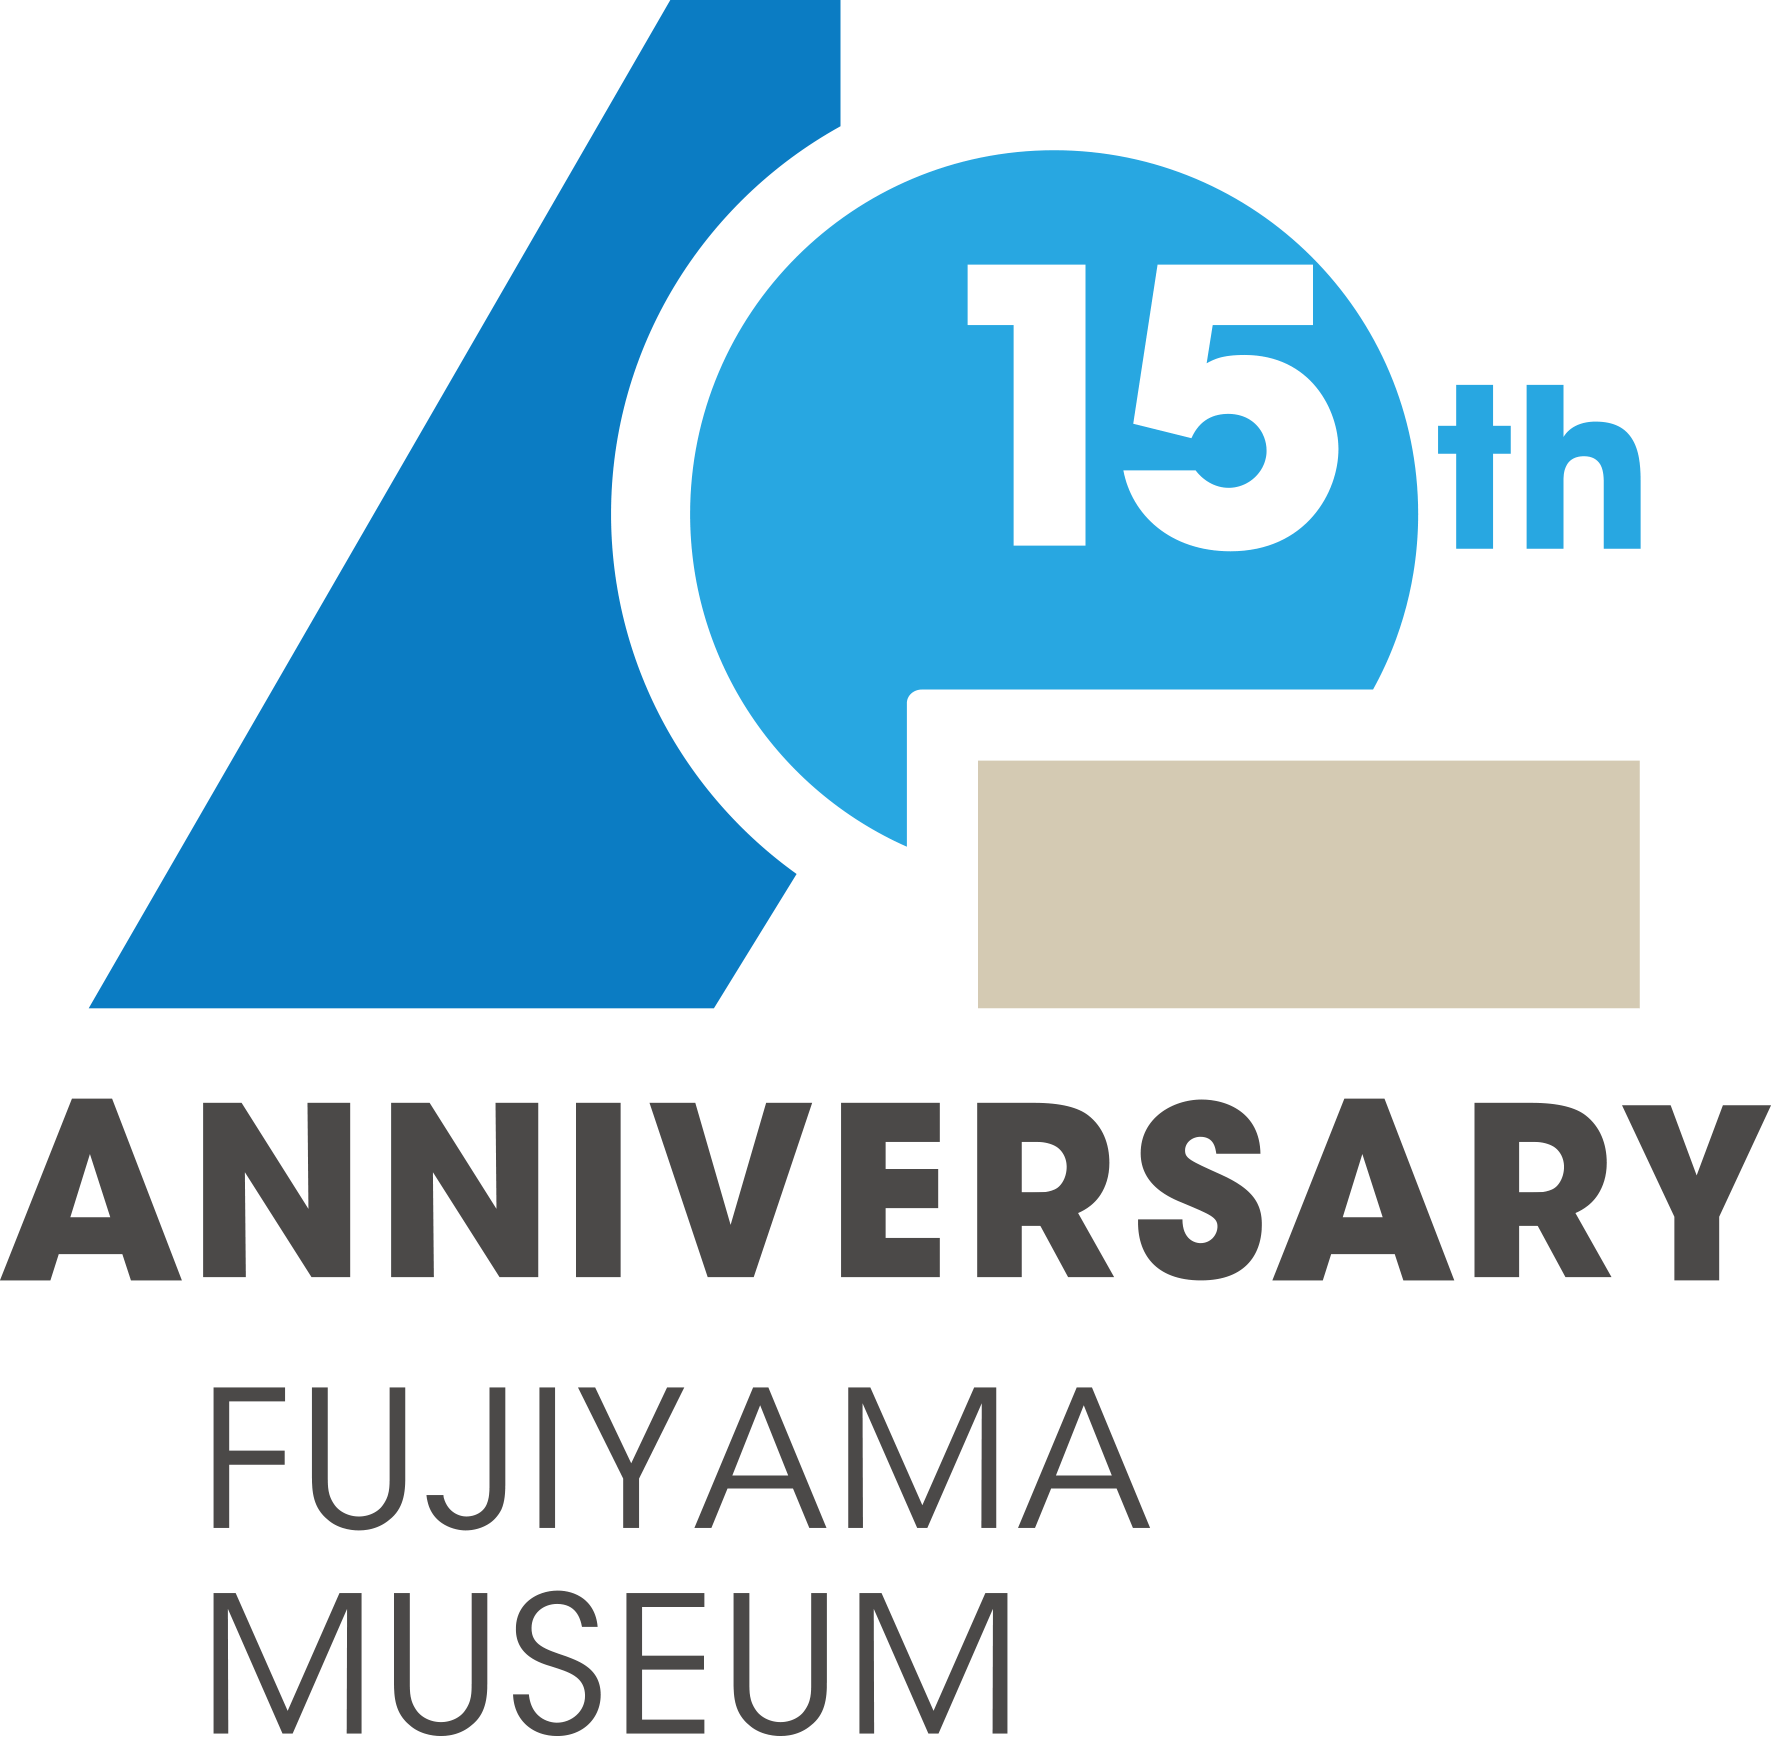 Fujiyama Logo - FUJIYAMA MUSEUM